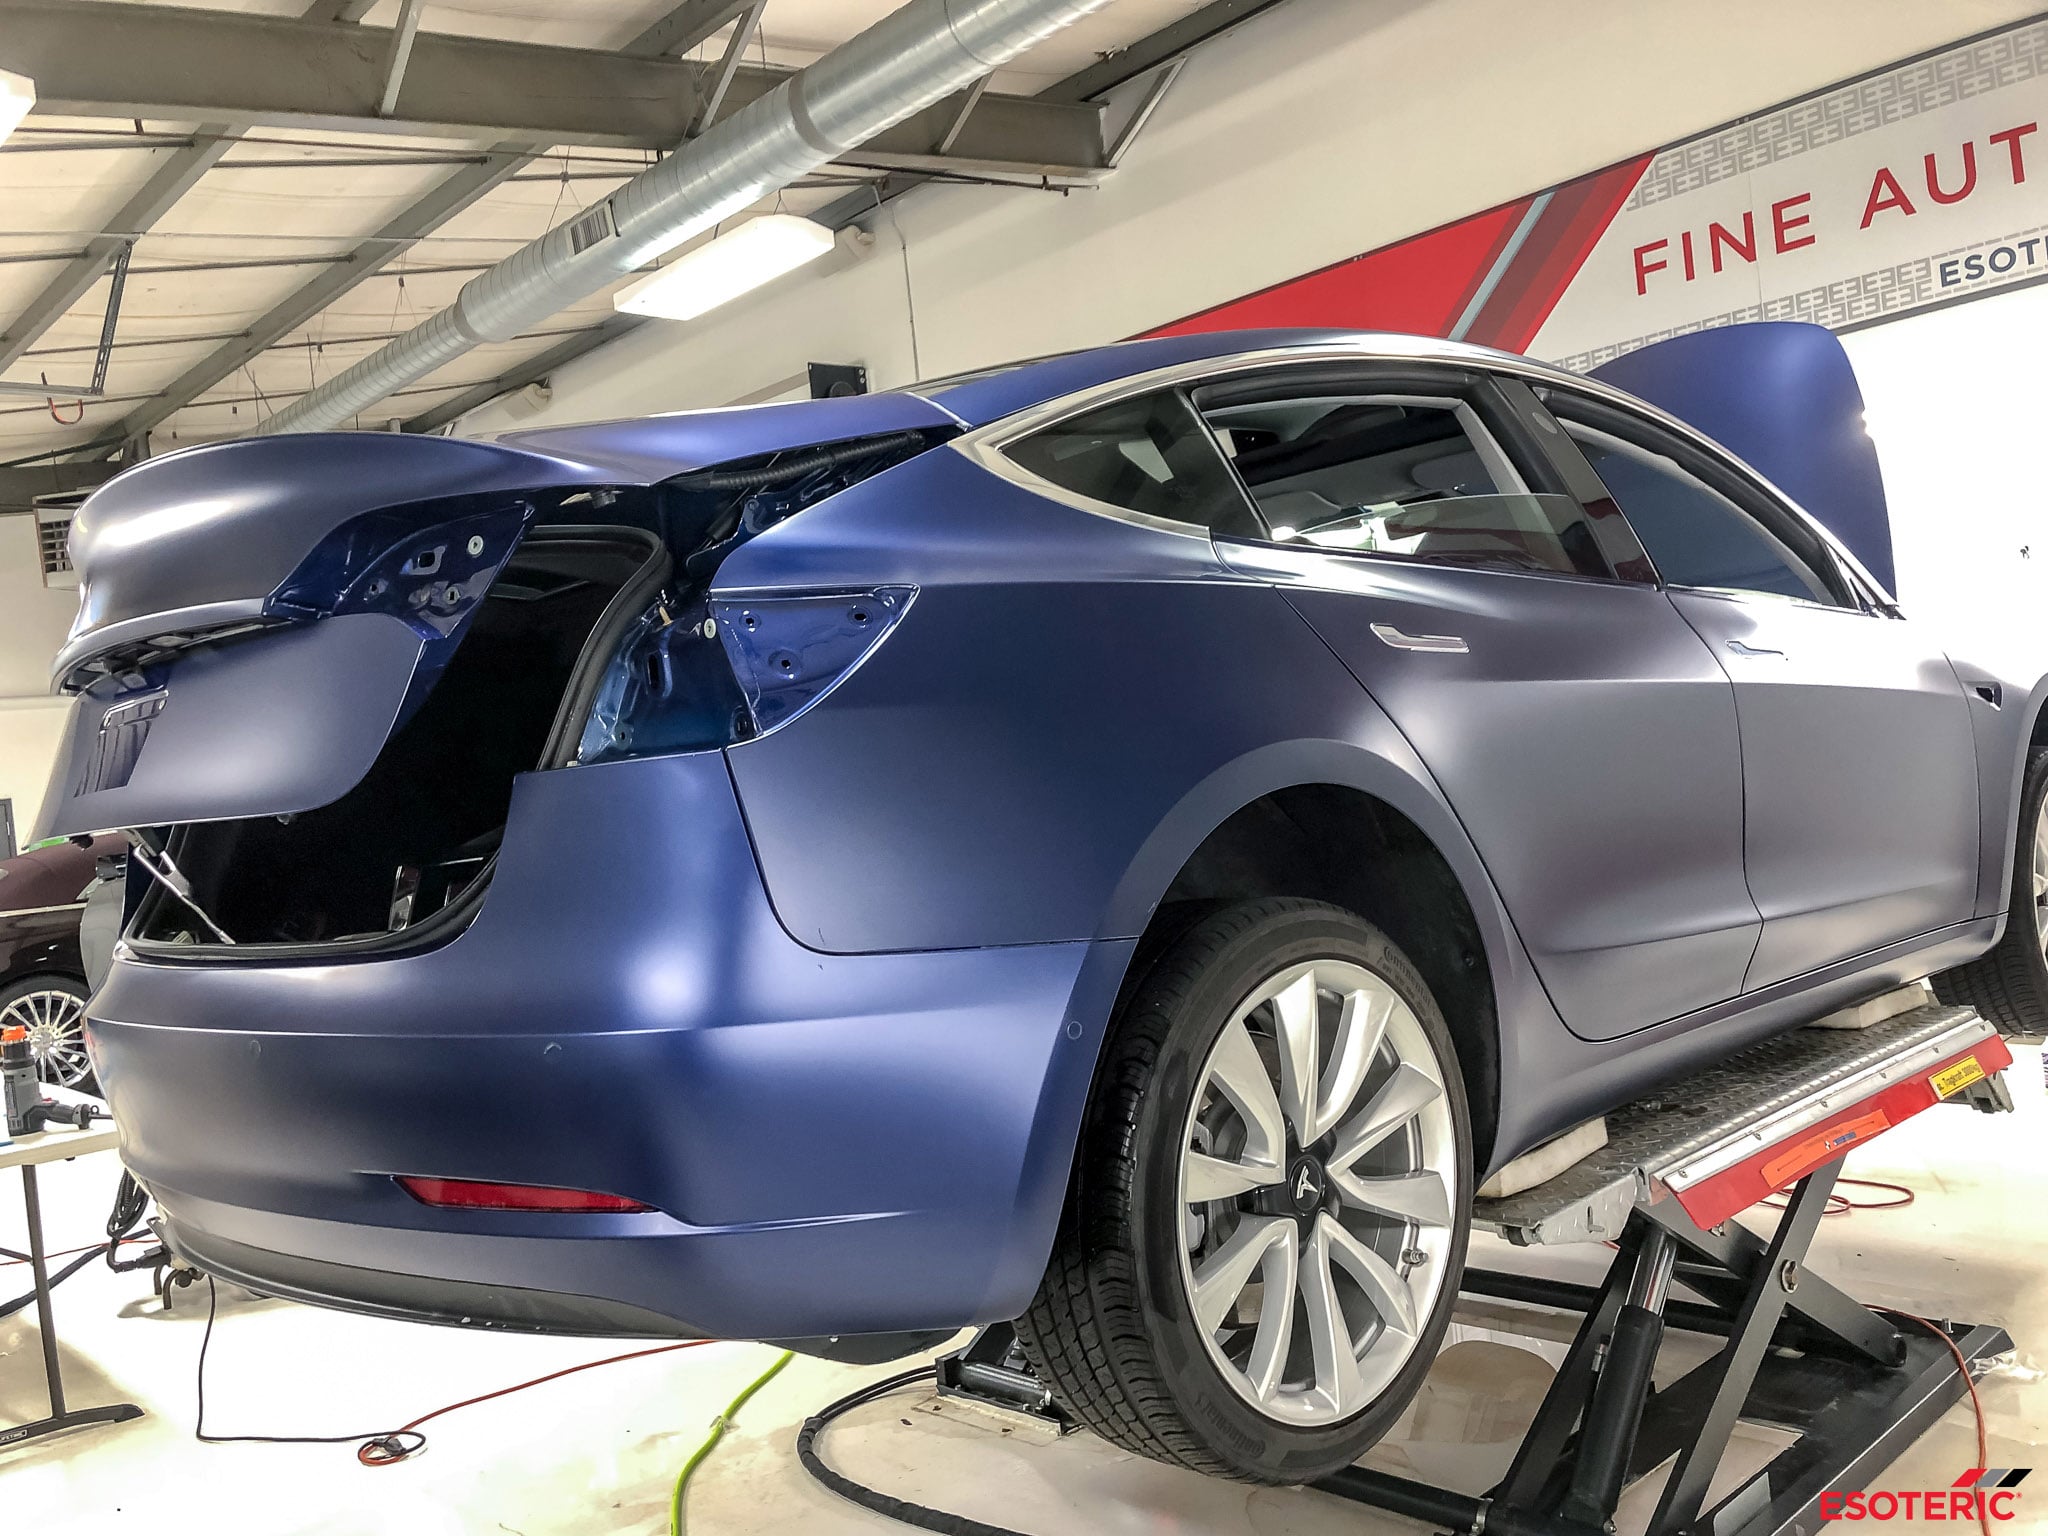 Tesla car being detailed at a car repair shop.